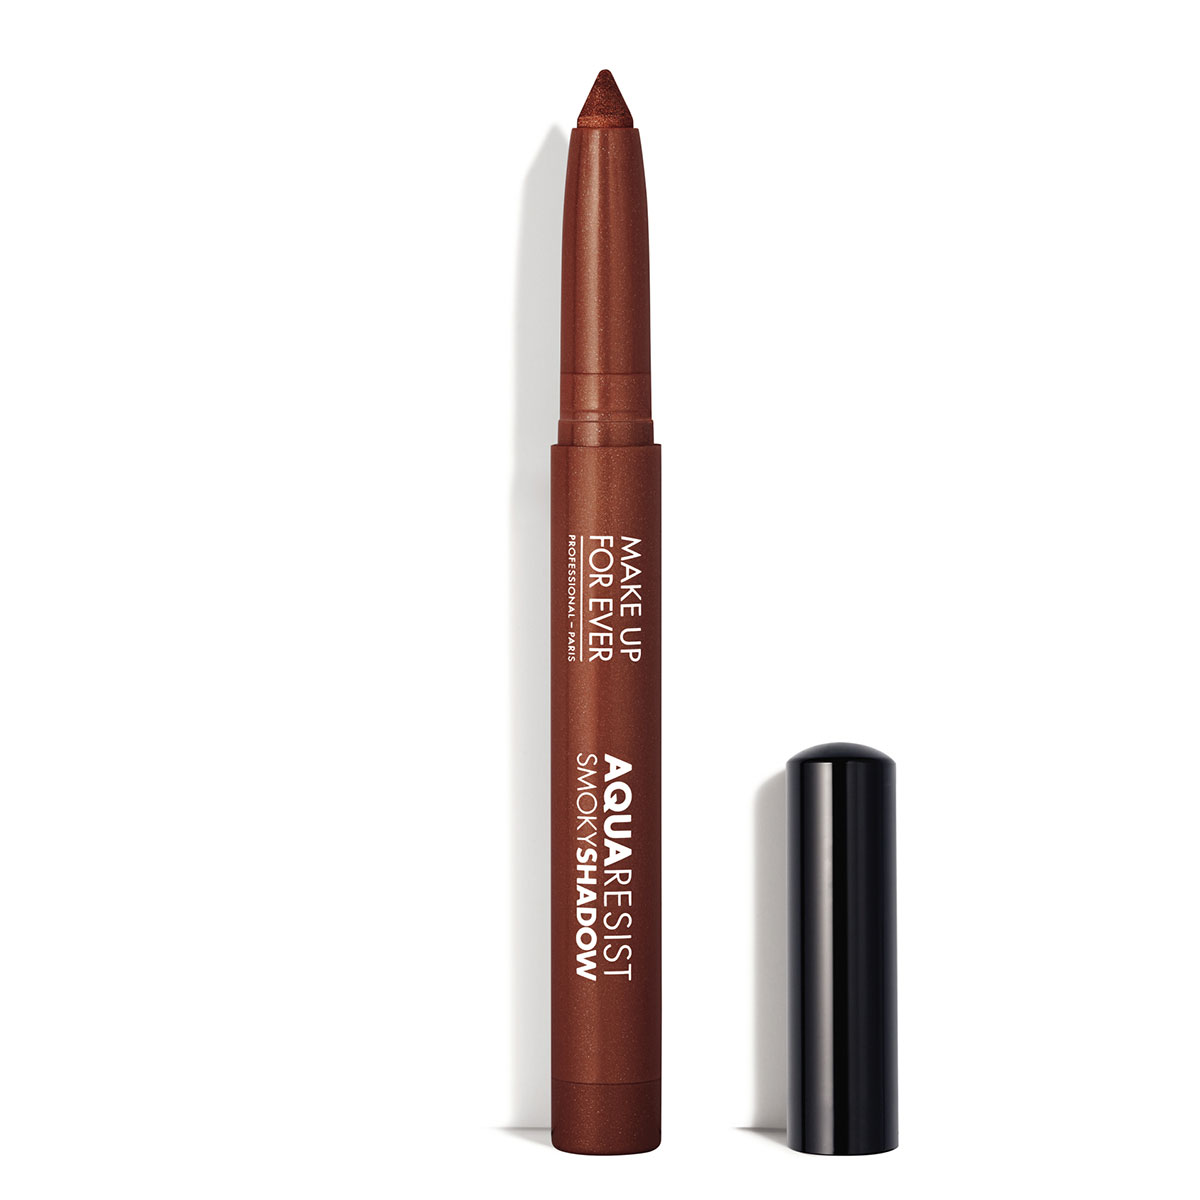 Make Up For Ever Aqua Resist Smoky Shadow Multi Use Eye Color Stick 06 Earth - Warm Brown 1.40G